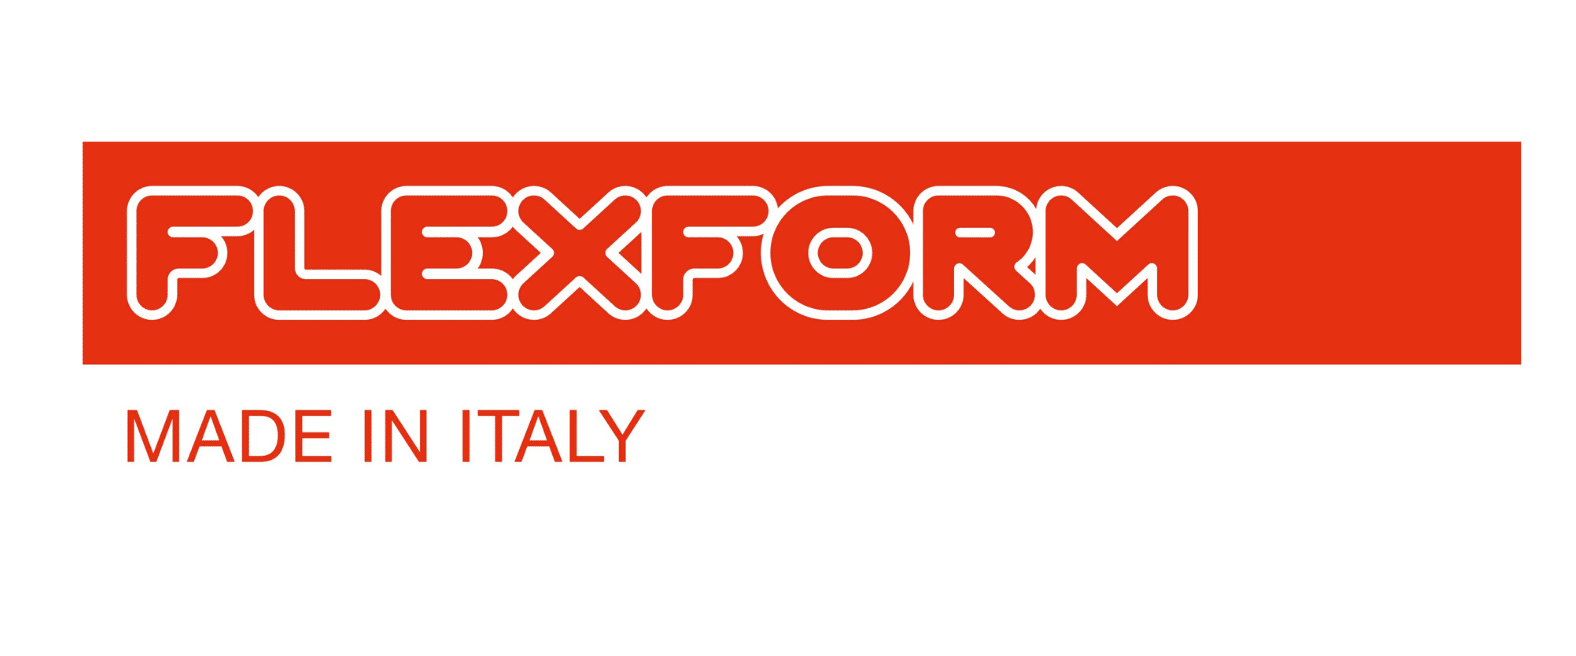 Flexform Reggio Calabria